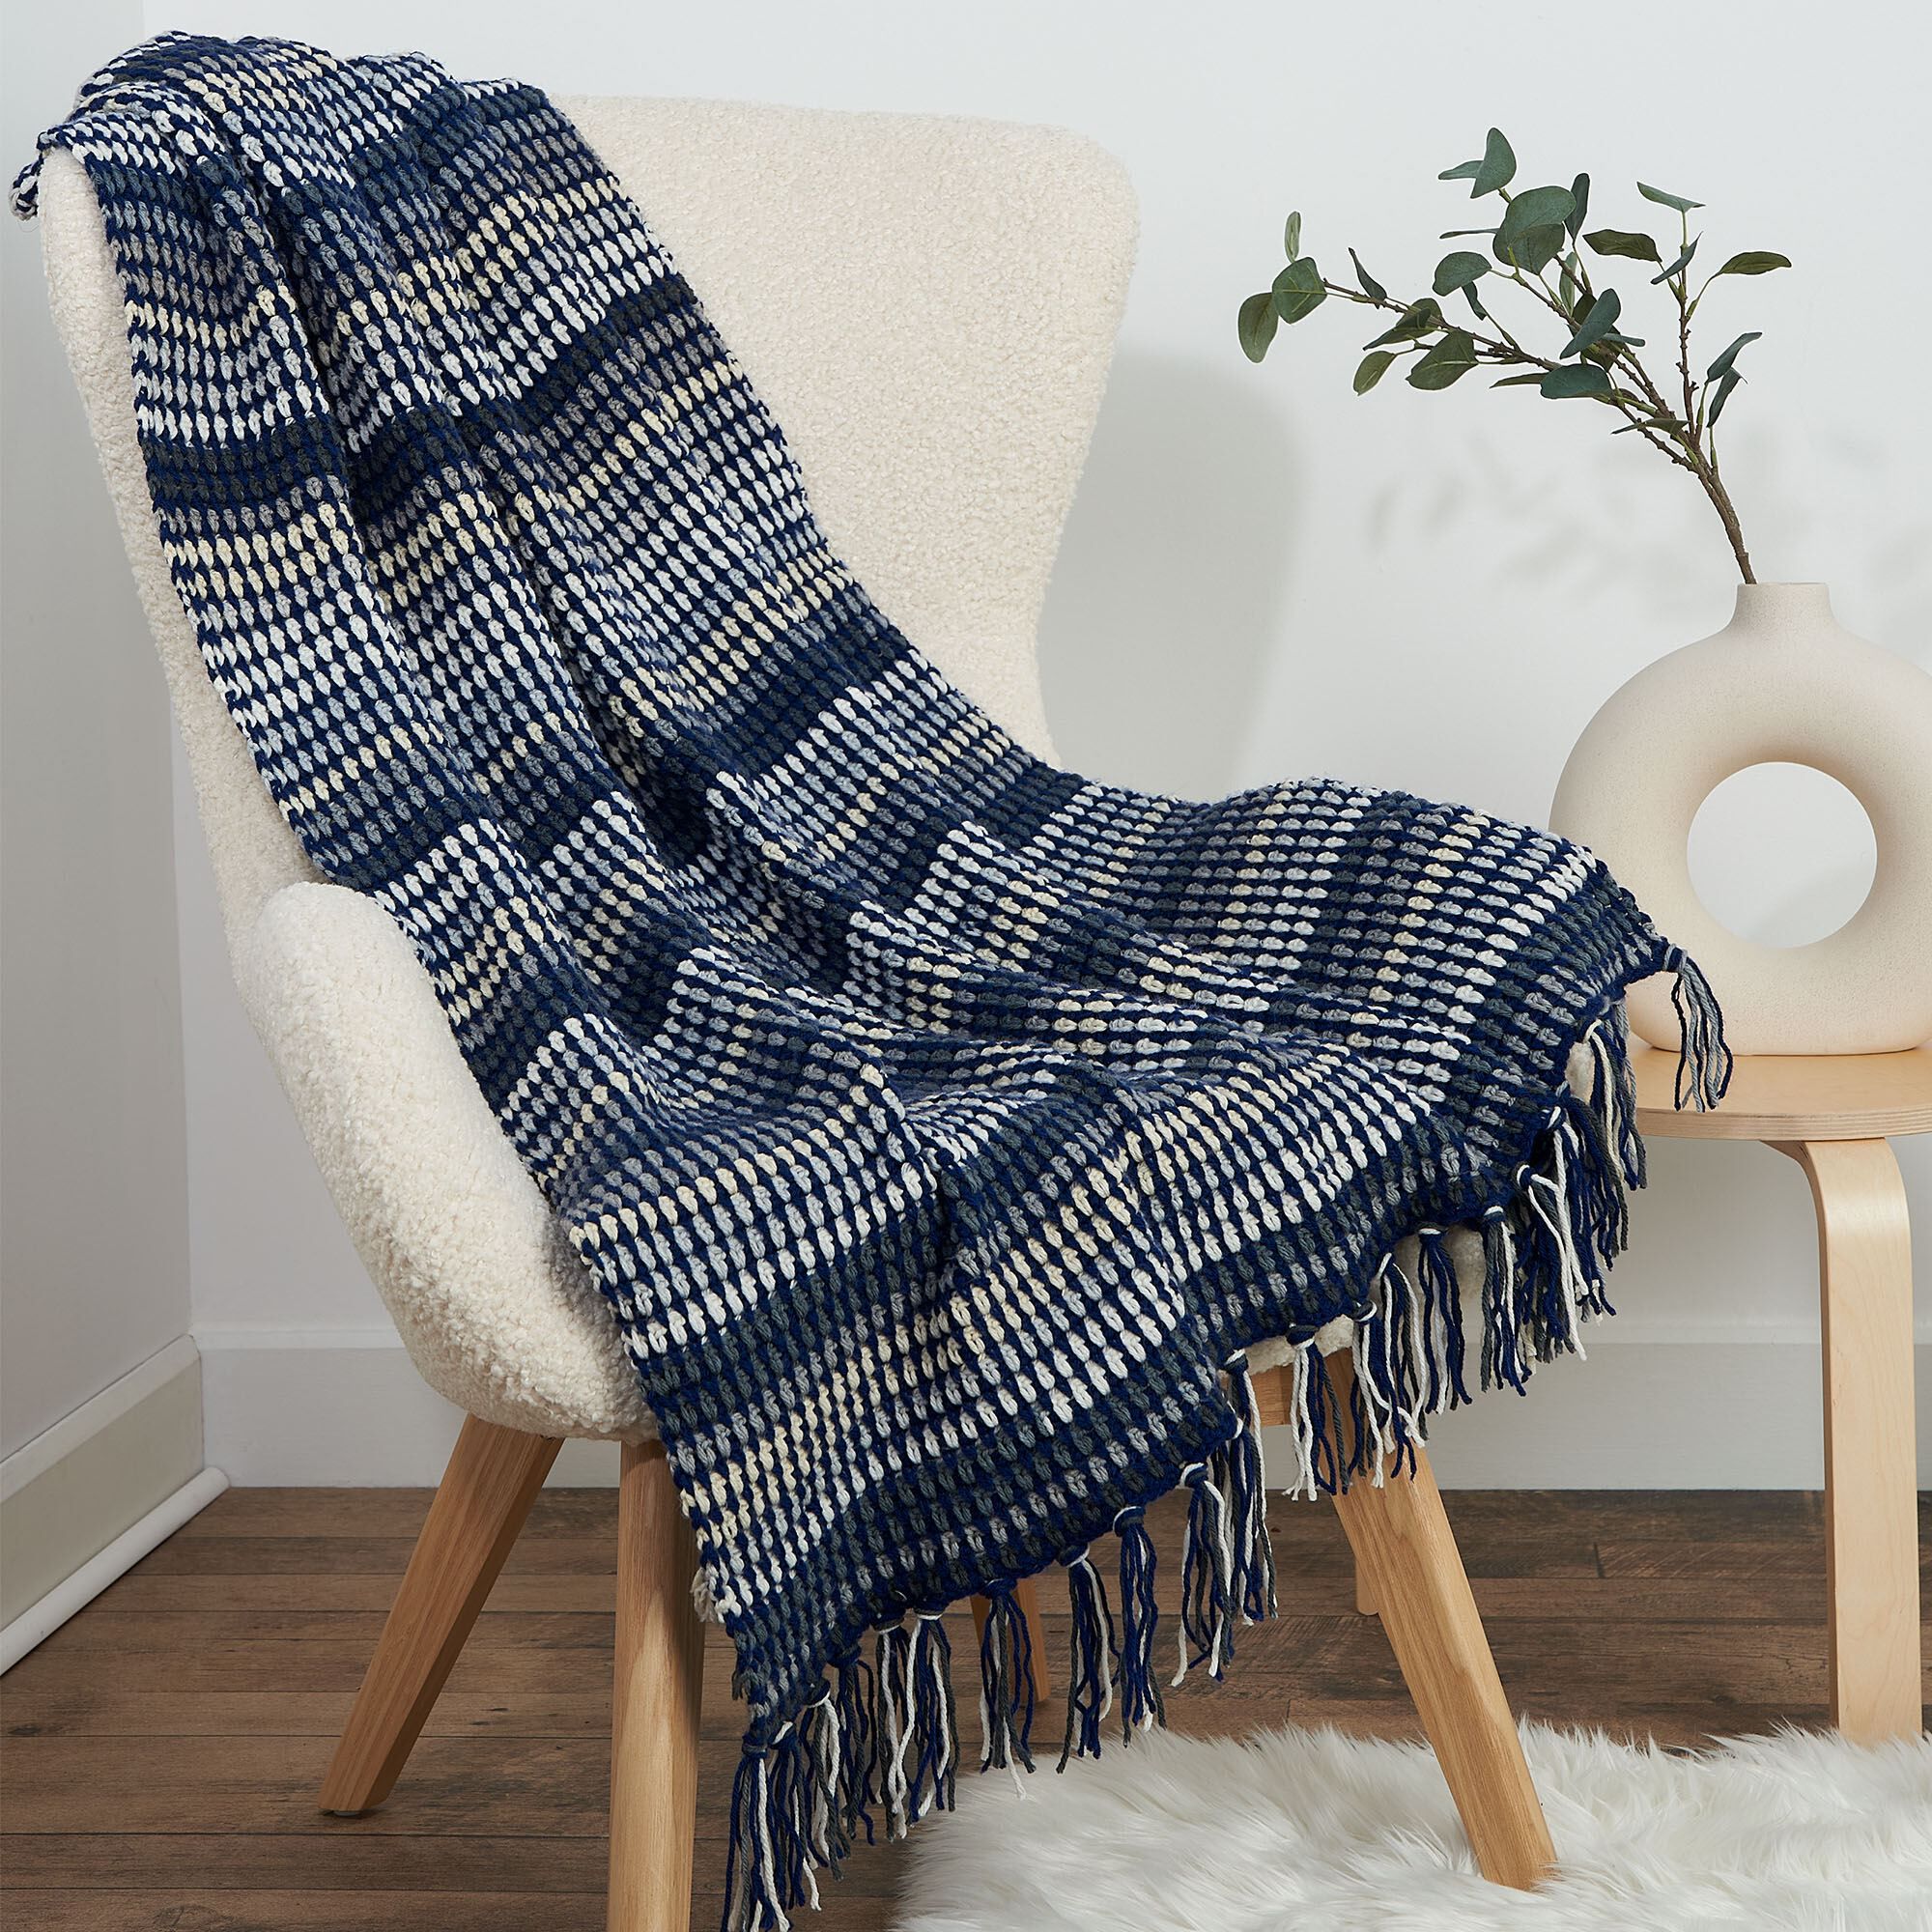 Crochet Patterns Galore - Moss the Line Blanket